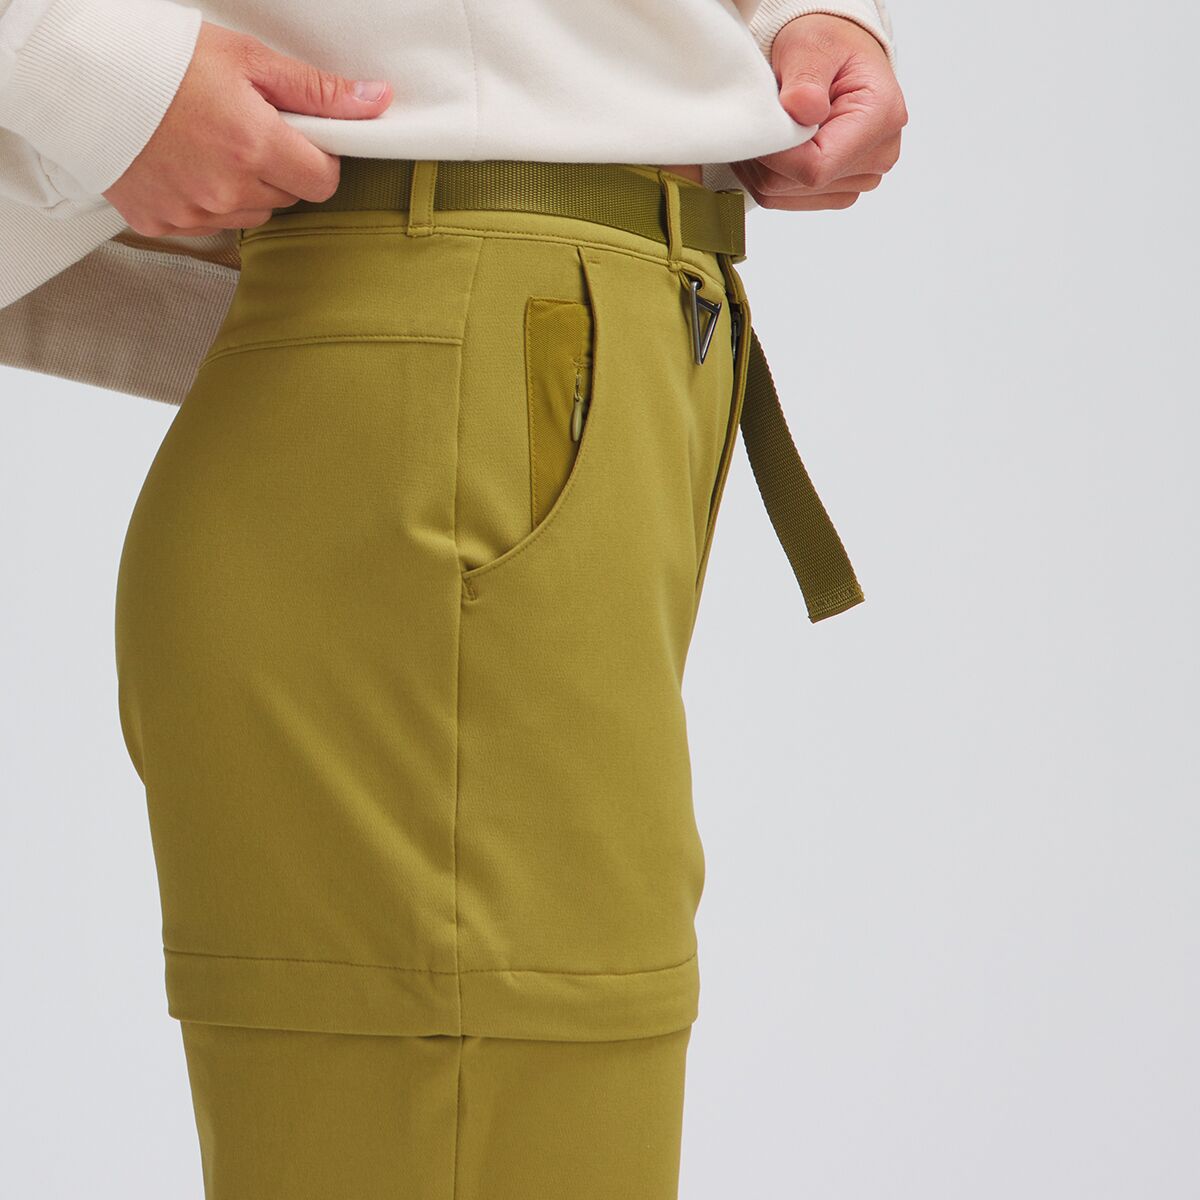 Maier Sports Nicole - Zip-off trousers Women's | Product Review |  Alpinetrek.co.uk